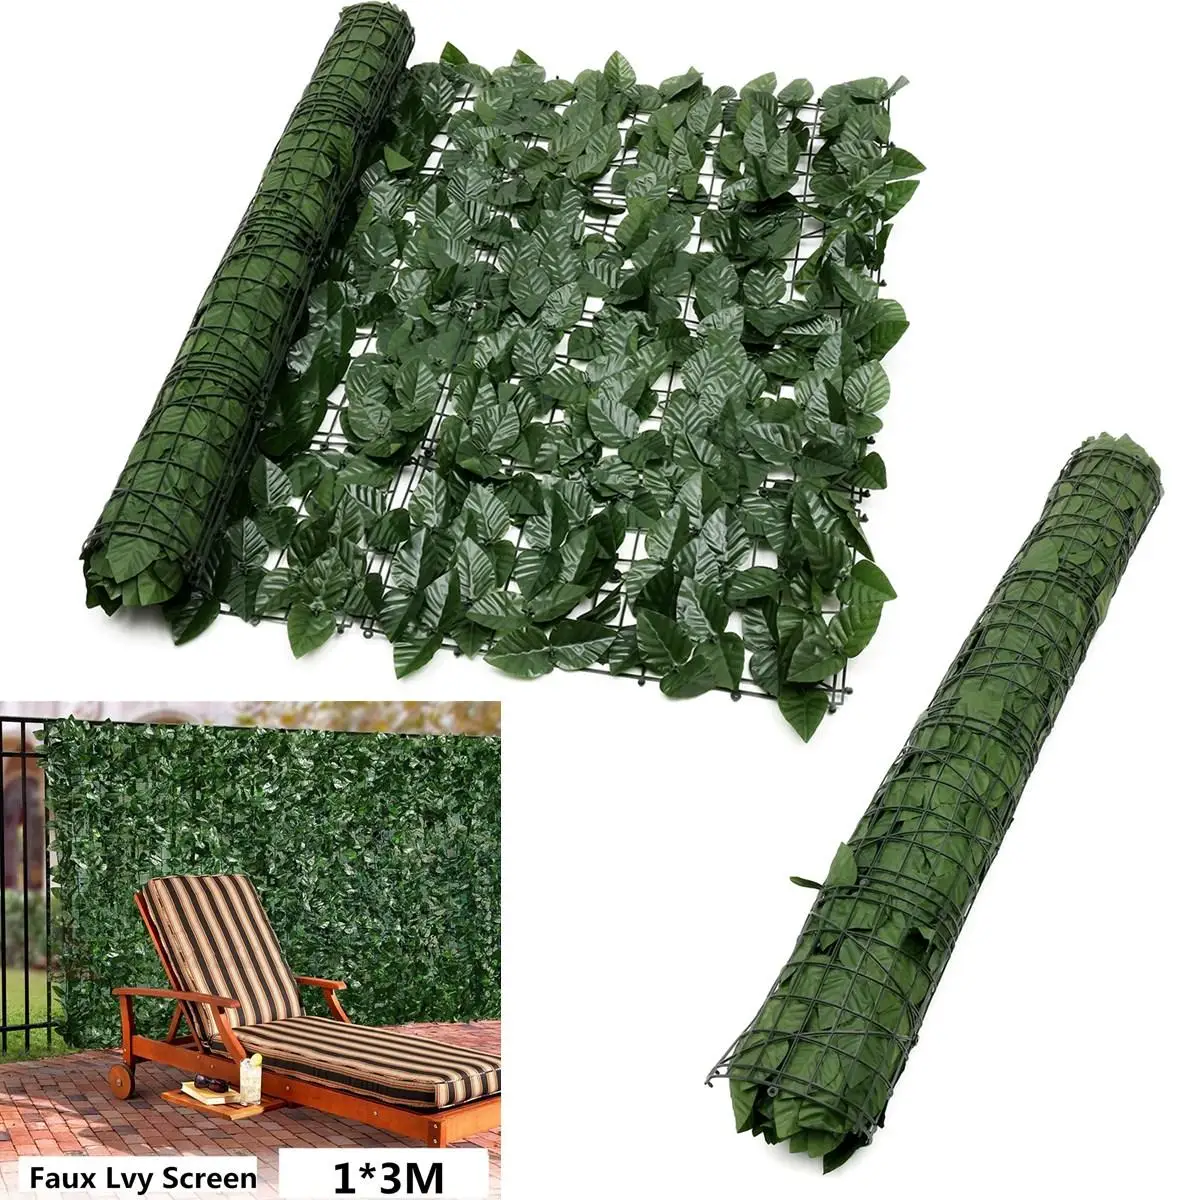 

5mx1m Plant Wall Artificial Lawn Boxwood Hedge Garden Backyard Home Decor Simulation Grass Turf Rug Lawn Outdoor Greening Wall